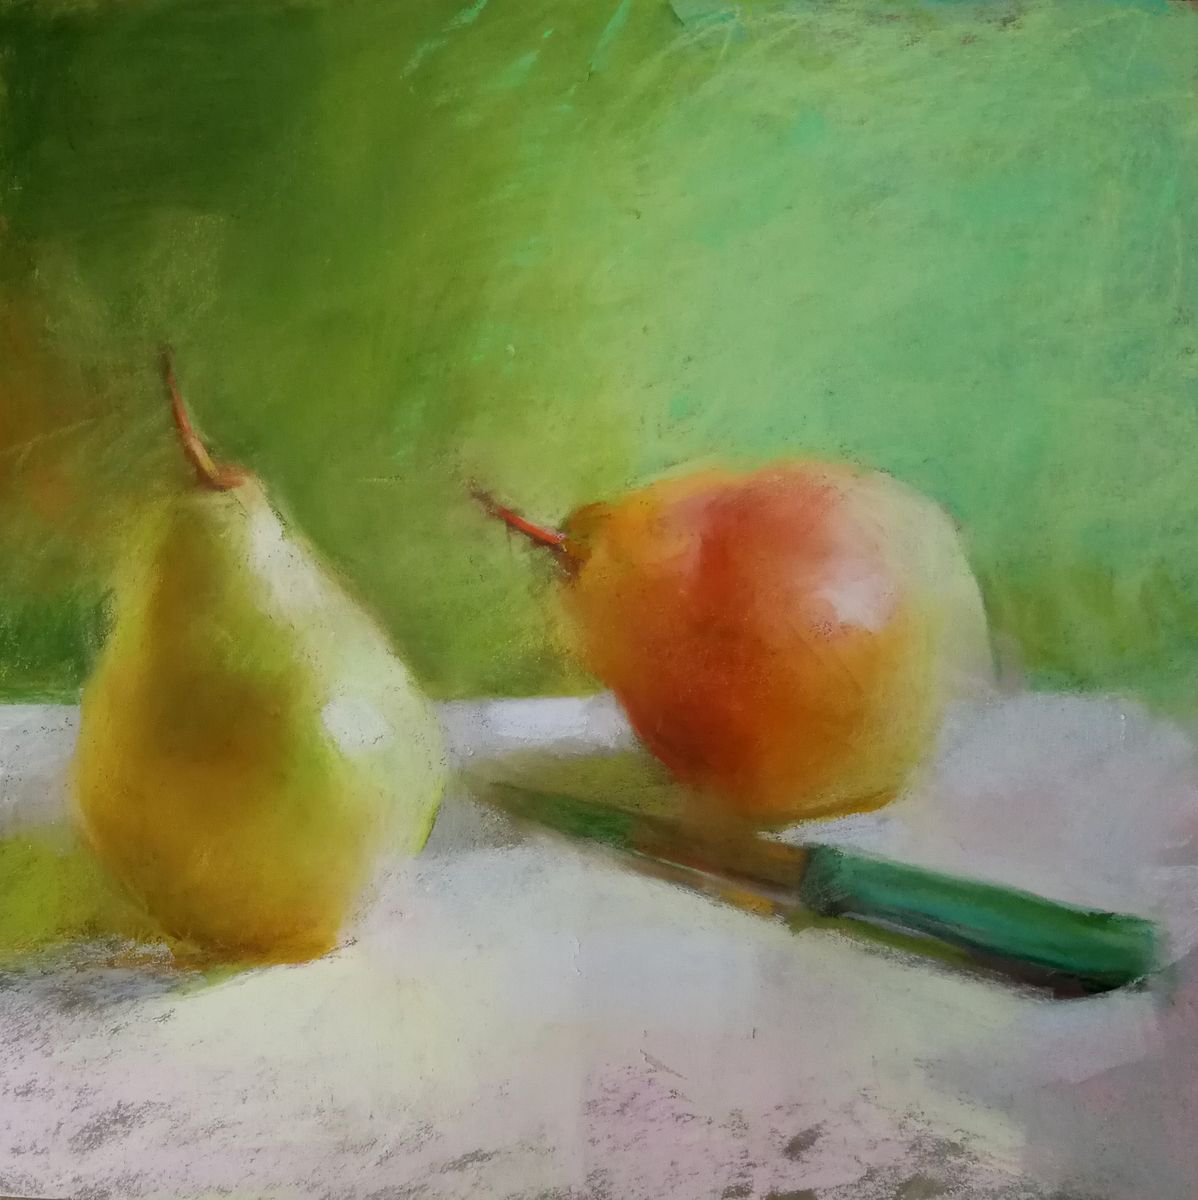 Pears with a knife in between by Silja Salmistu